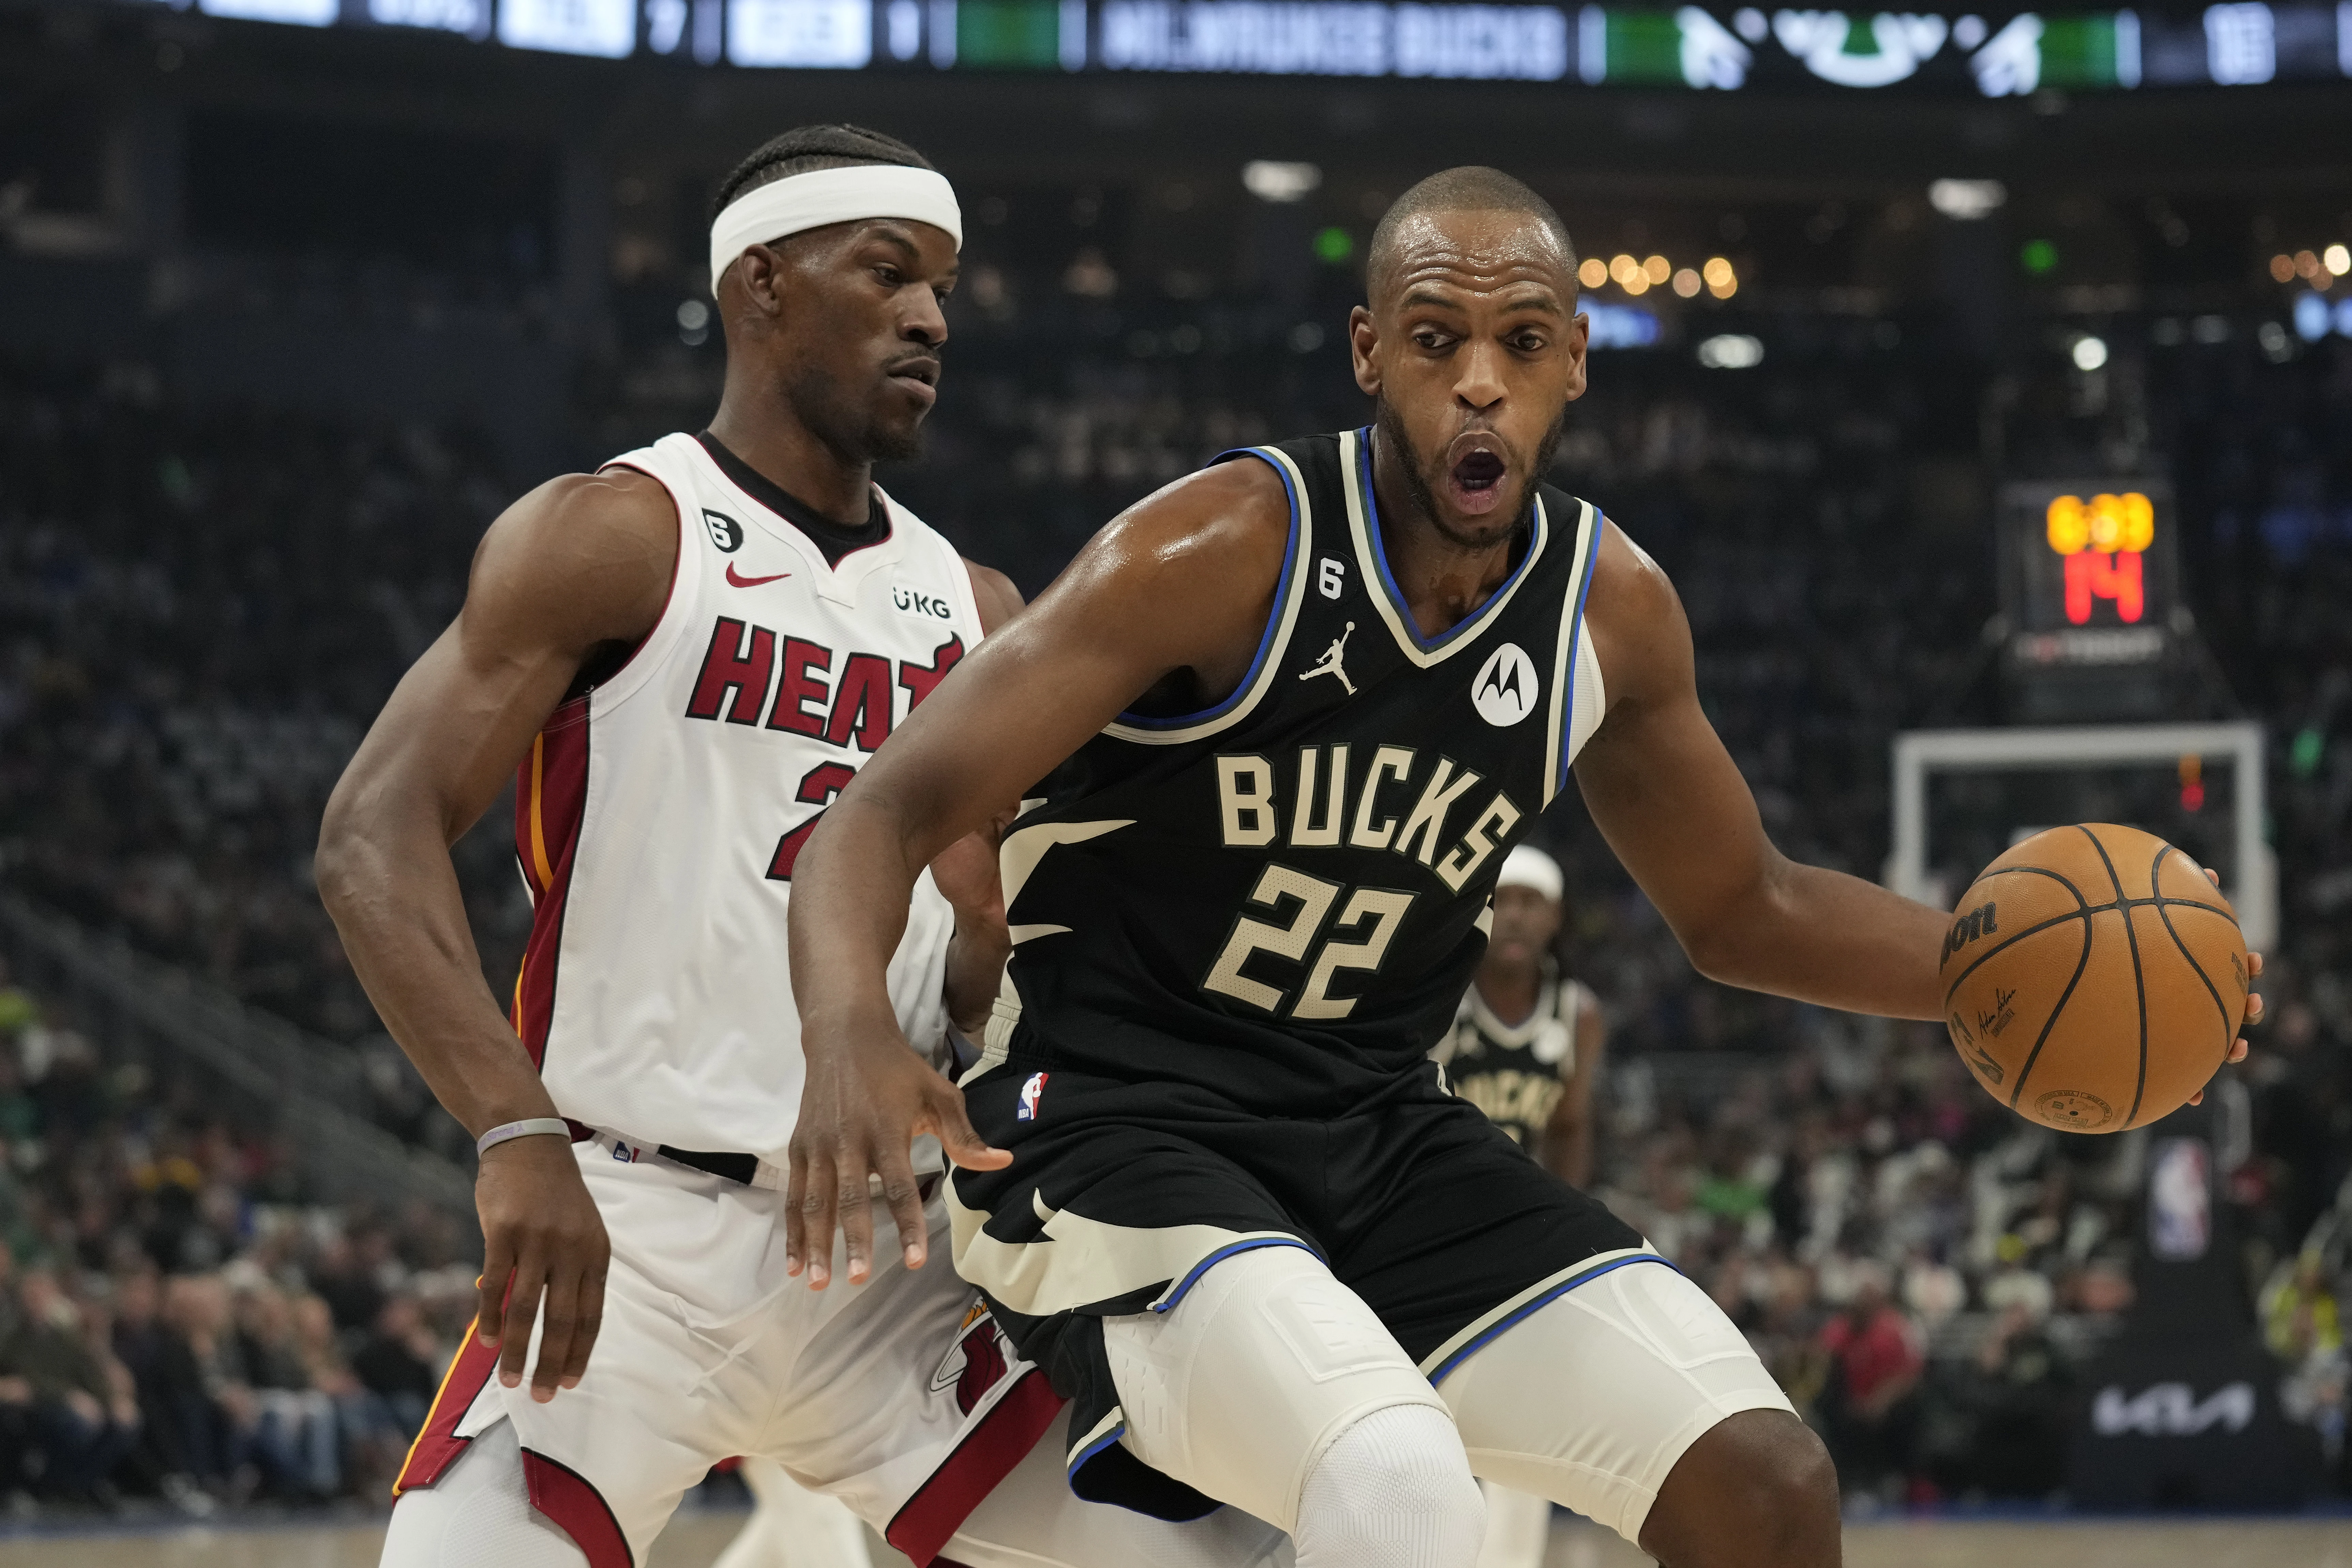 Giannis Antetokounmpo NBA Playoffs Player Props: Bucks vs. Heat